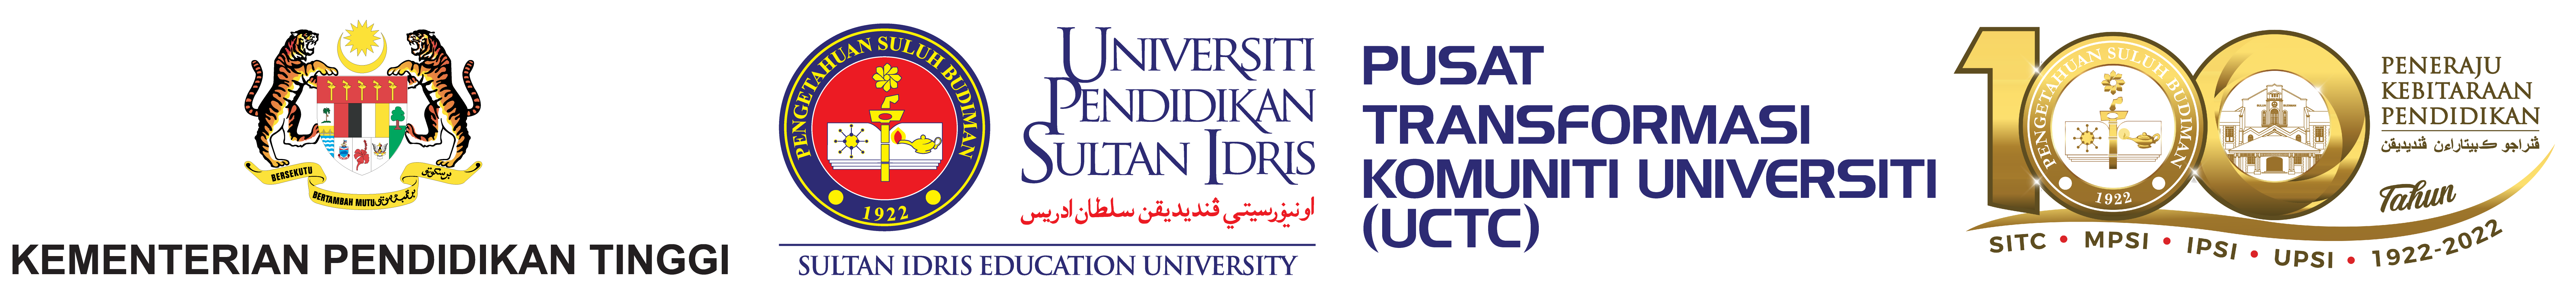 UPSI | Pusat Transformasi Komuniti Universiti